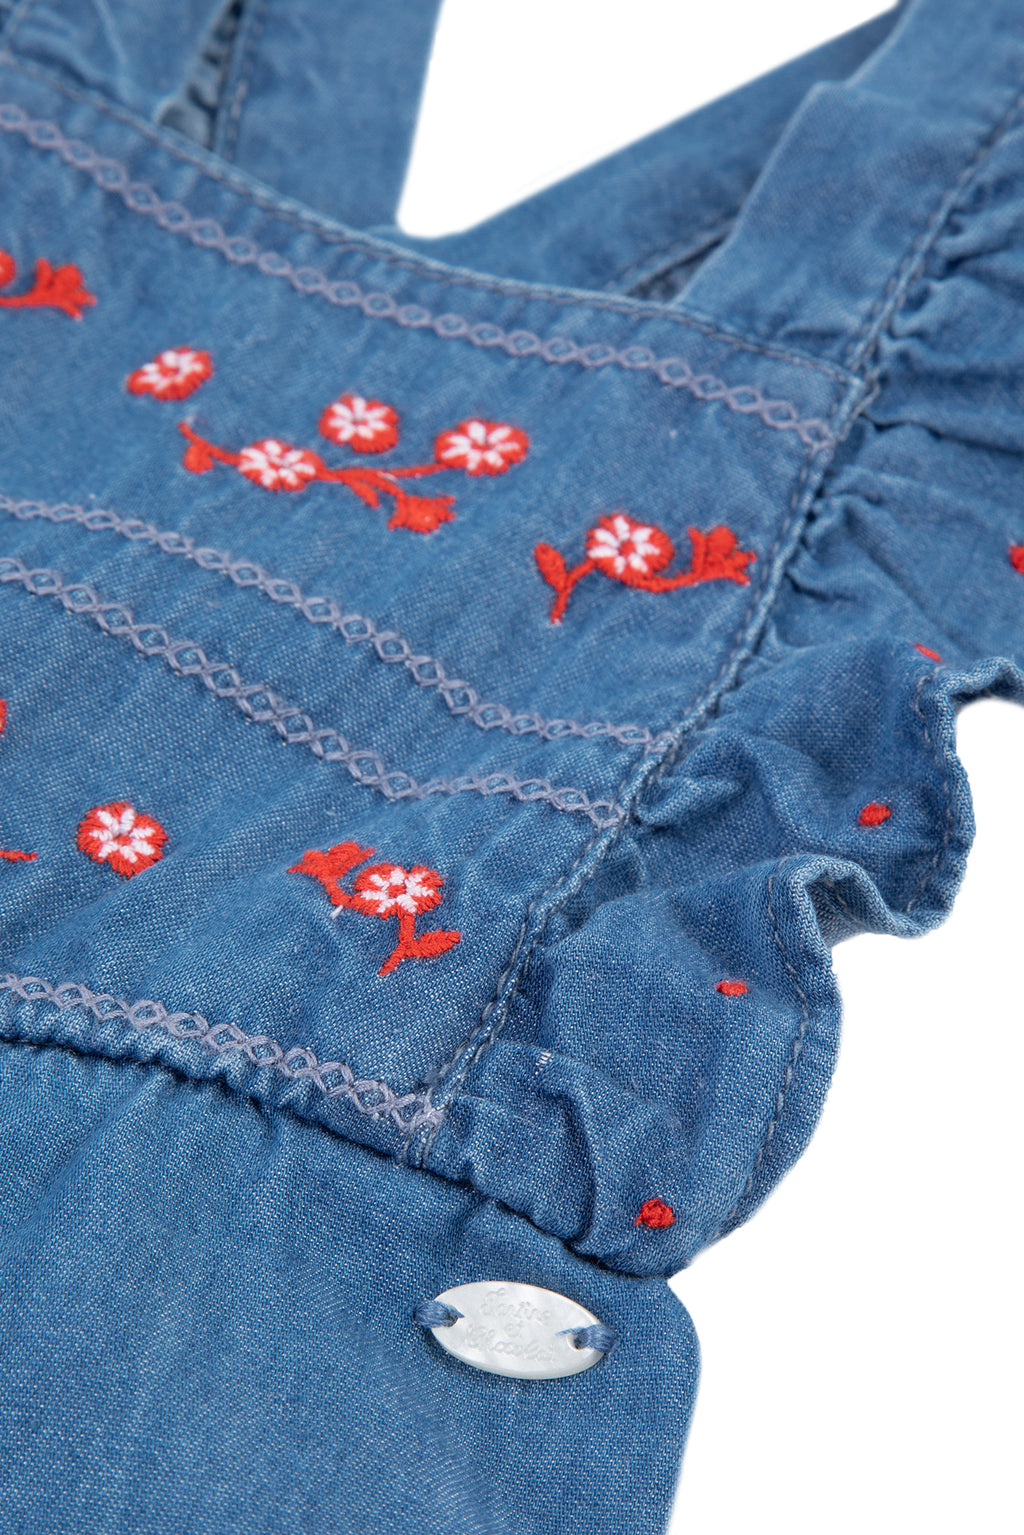 Salopette - Blue Floral Embroidery